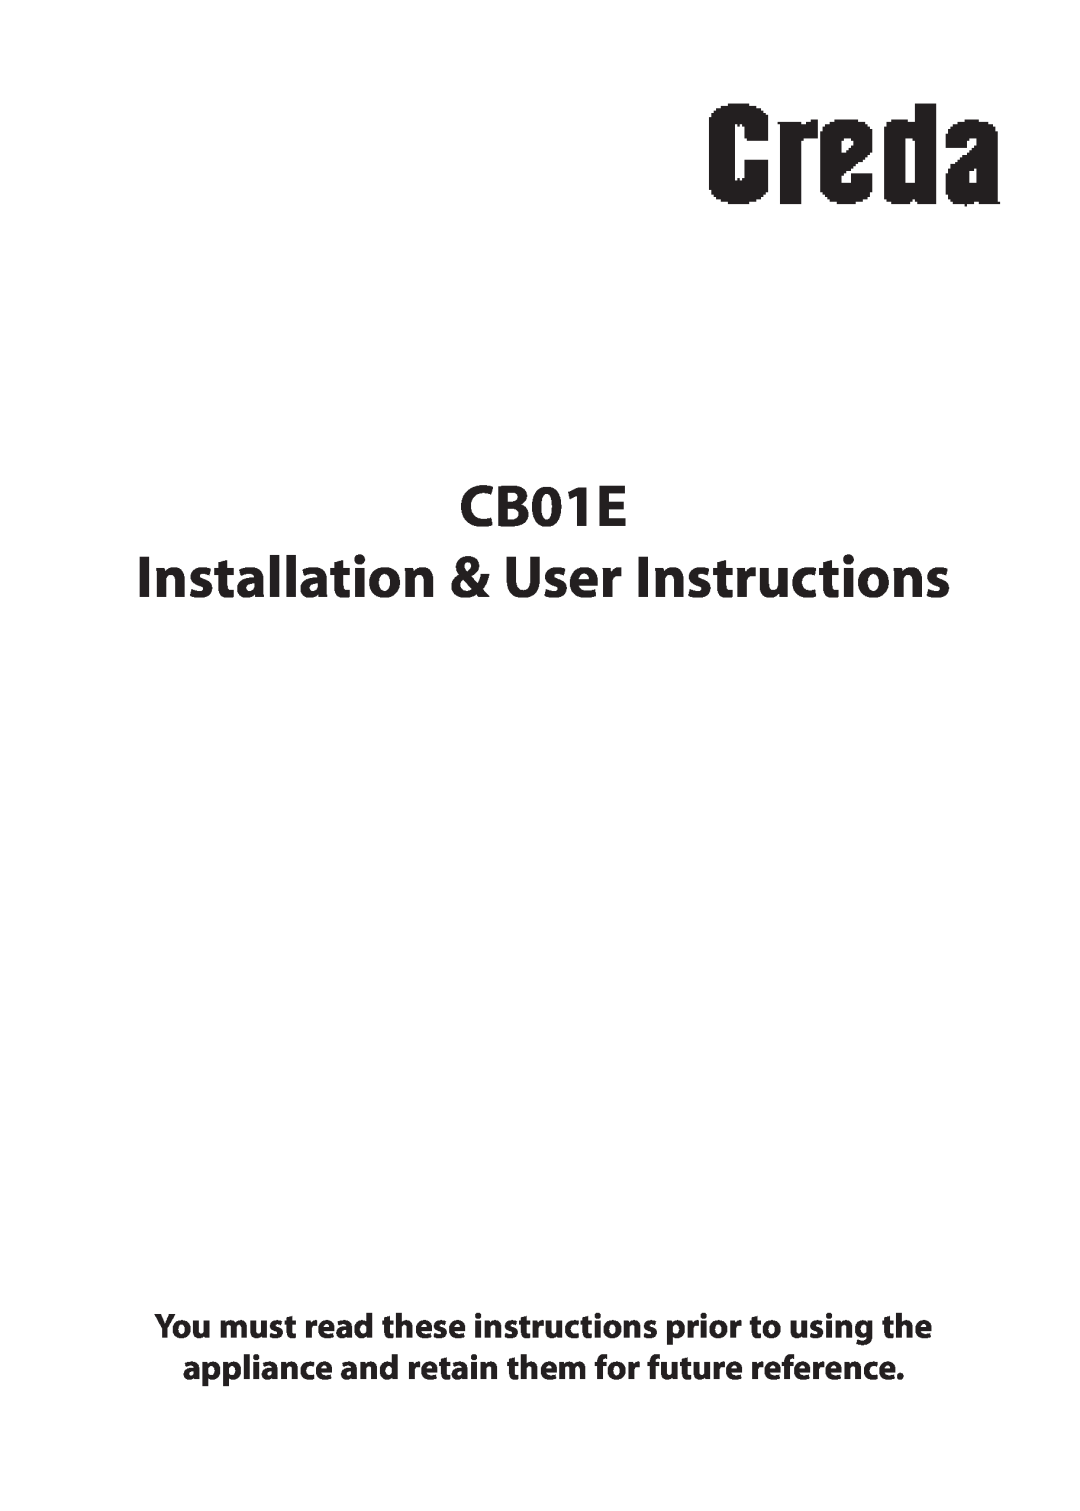 Creda manual CB01E Installation & User Instructions 